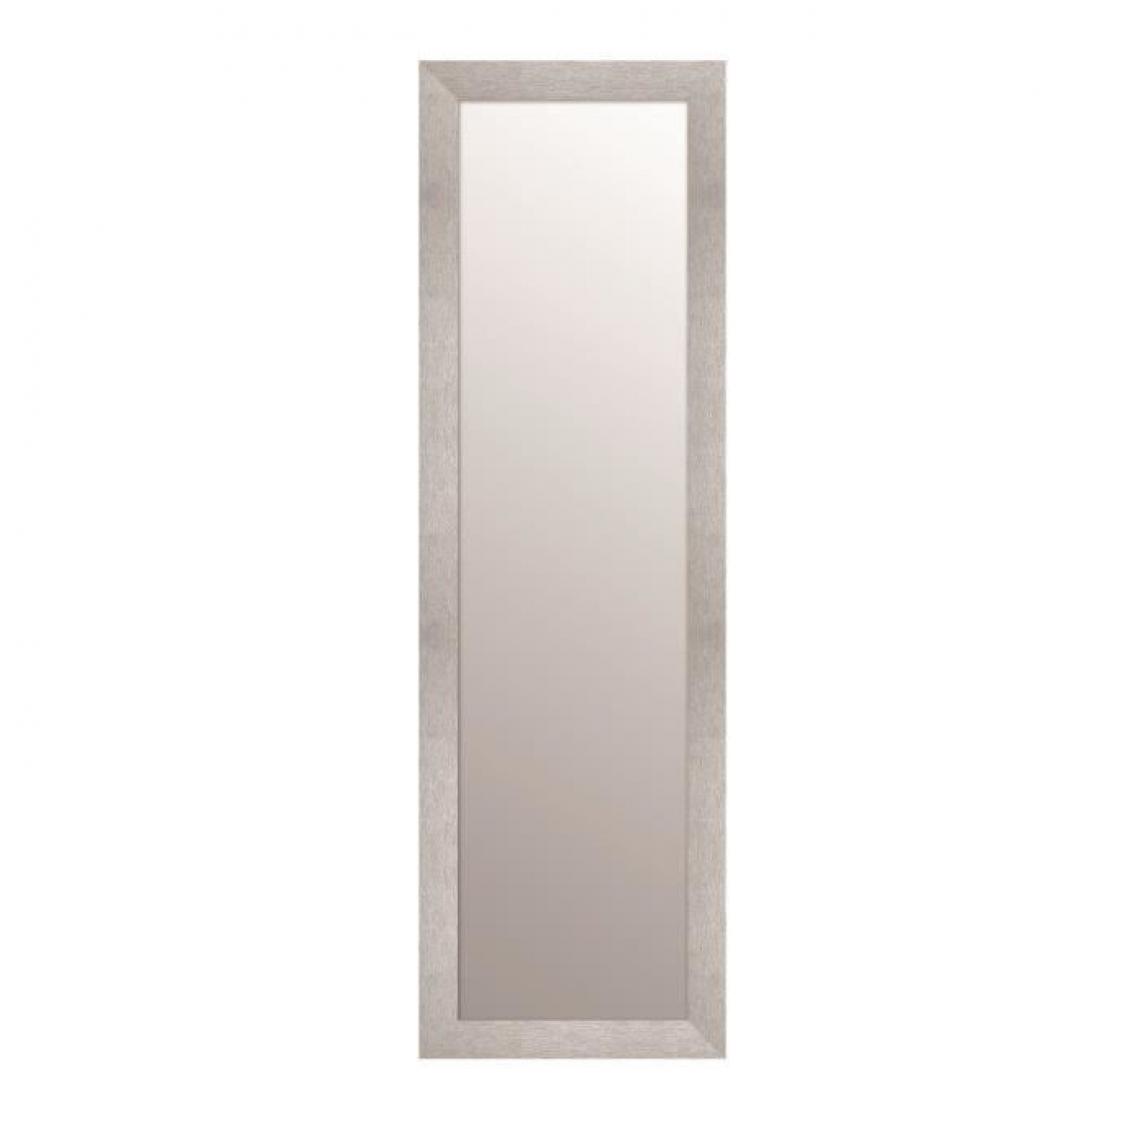 Icaverne - MIROIR TEXA Miroir rectangulaire 30x120 cm Argent - Miroir de salle de bain